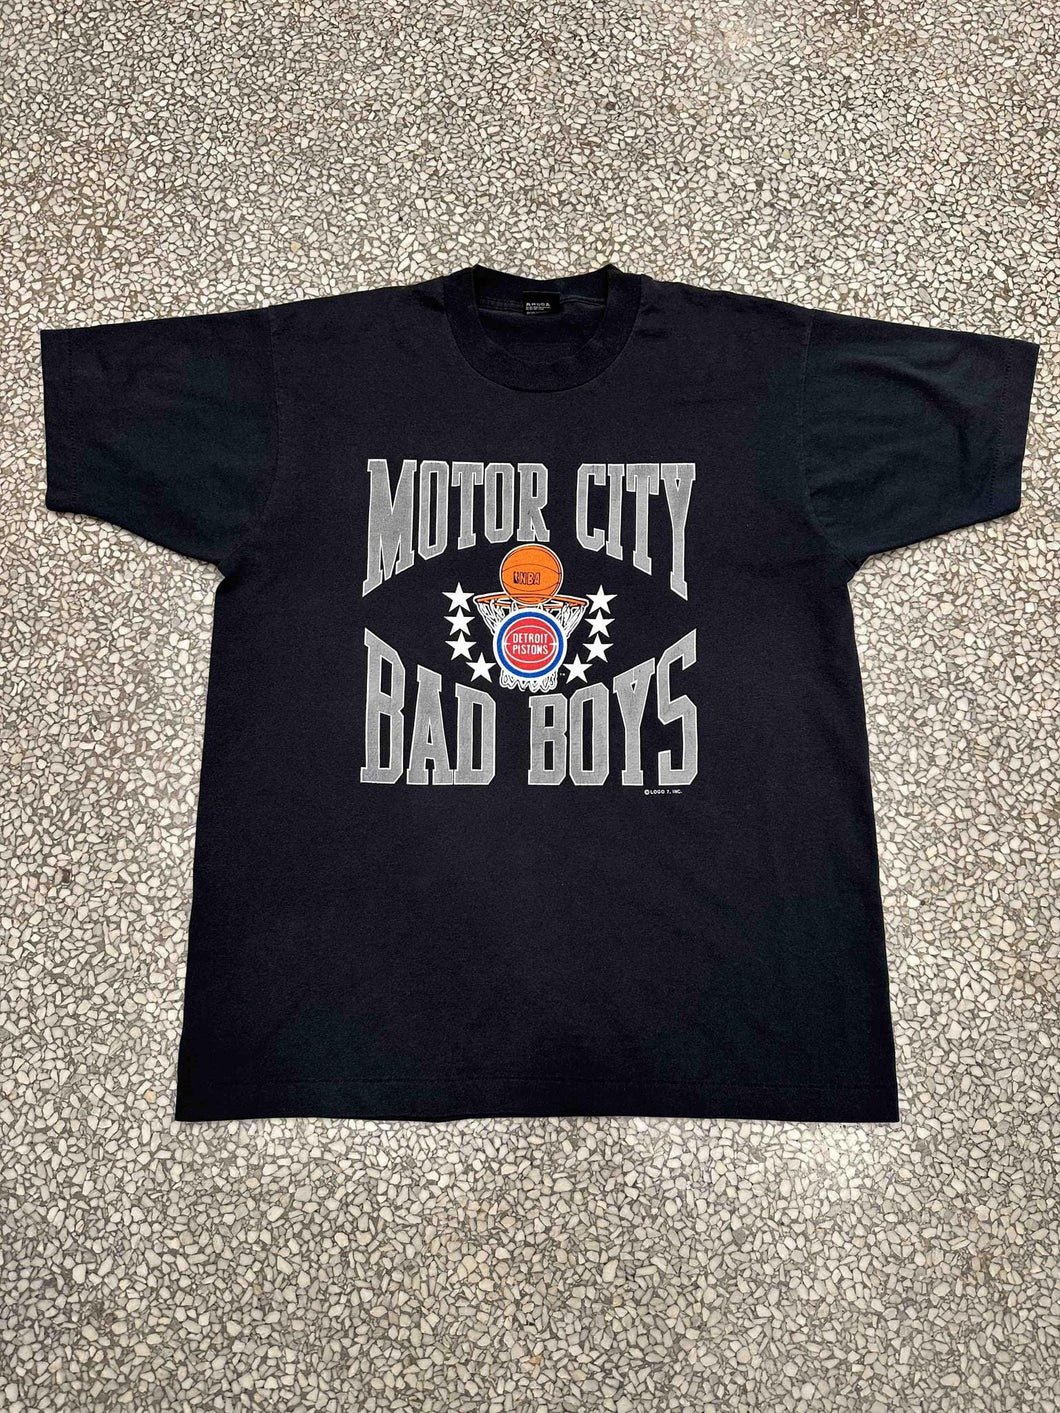 Detroit Pistons Vintage 80s Motor City Bad Boys Crest Starts Faded Black ABC Vintage 